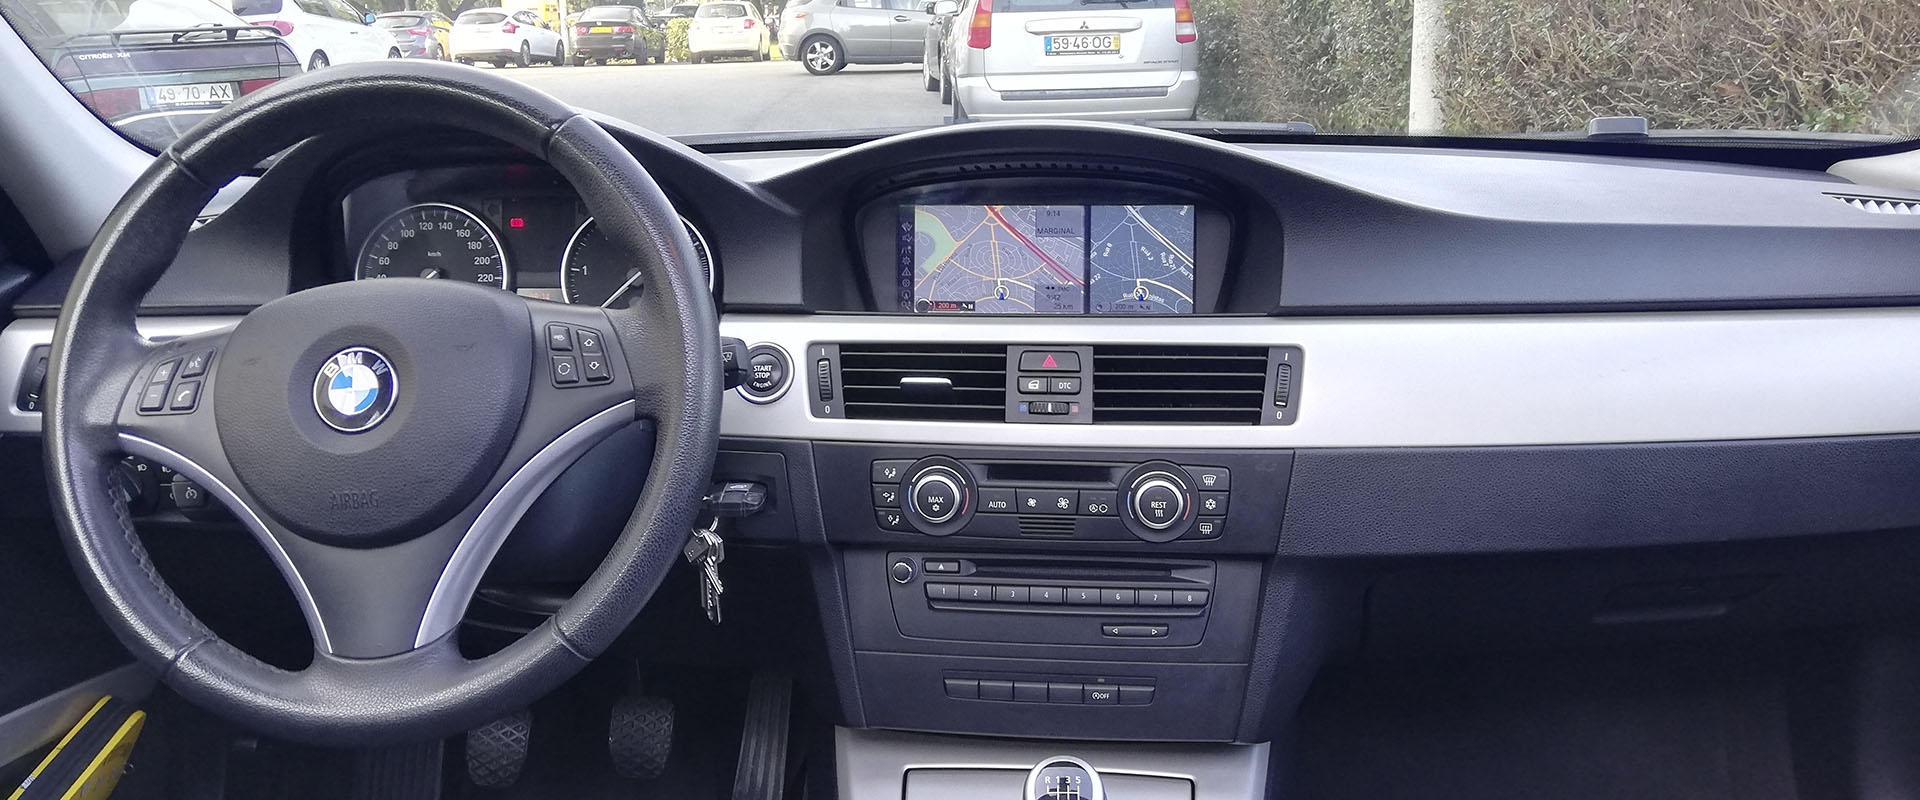 BMW 320d Touring Navigation